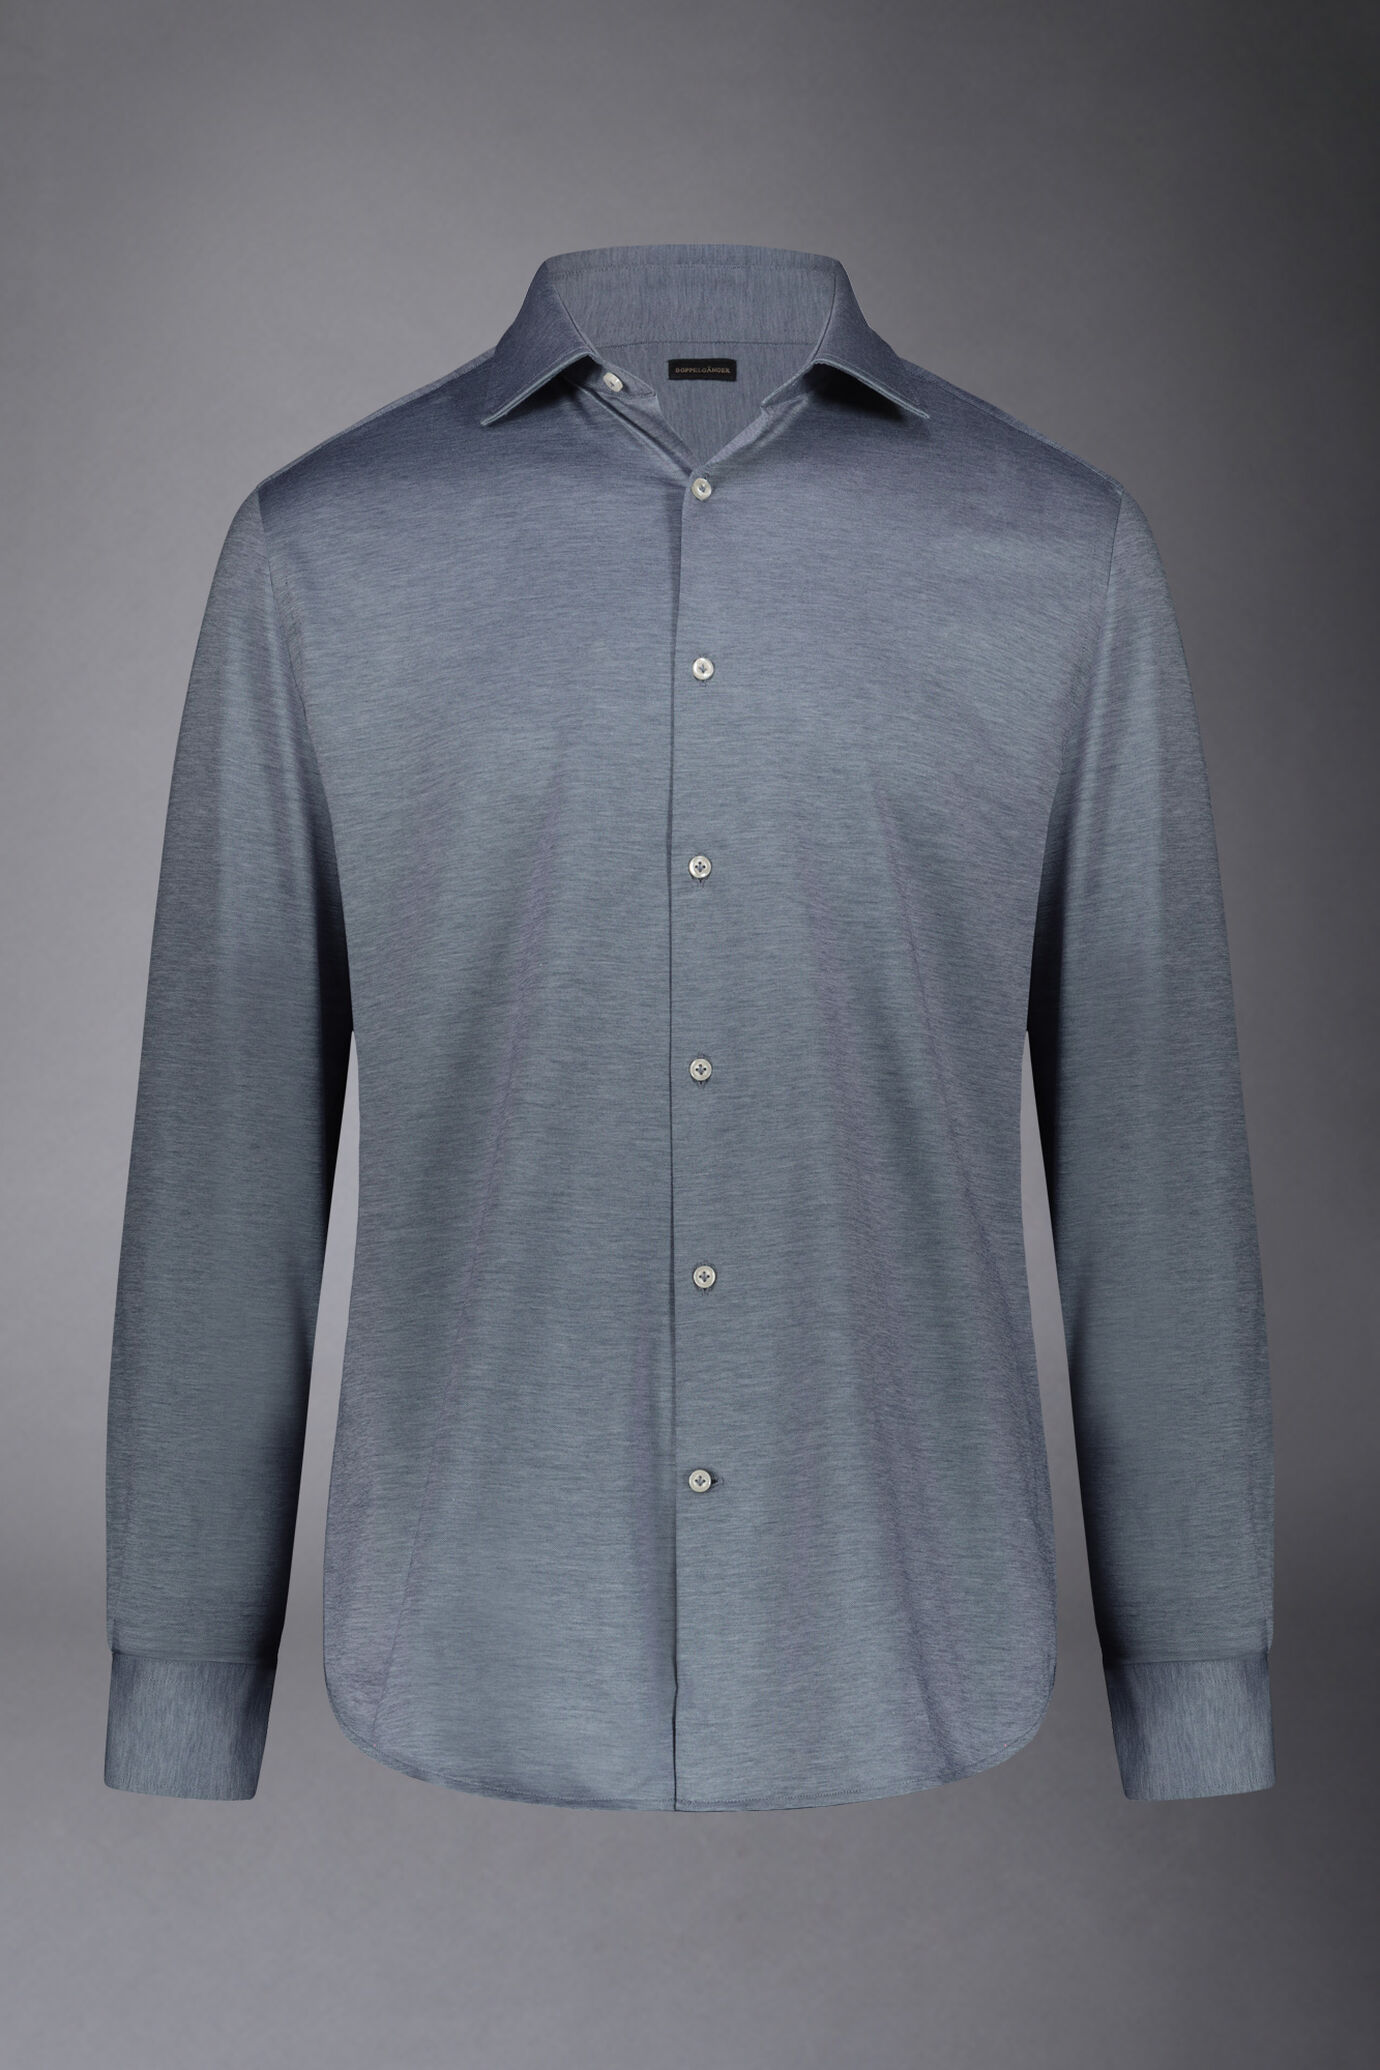 Klassisches geschlechtsloses Jersey-Shirt Französischer Kragen Bequeme Passform Bedruckter Melange-Stoff image number 4